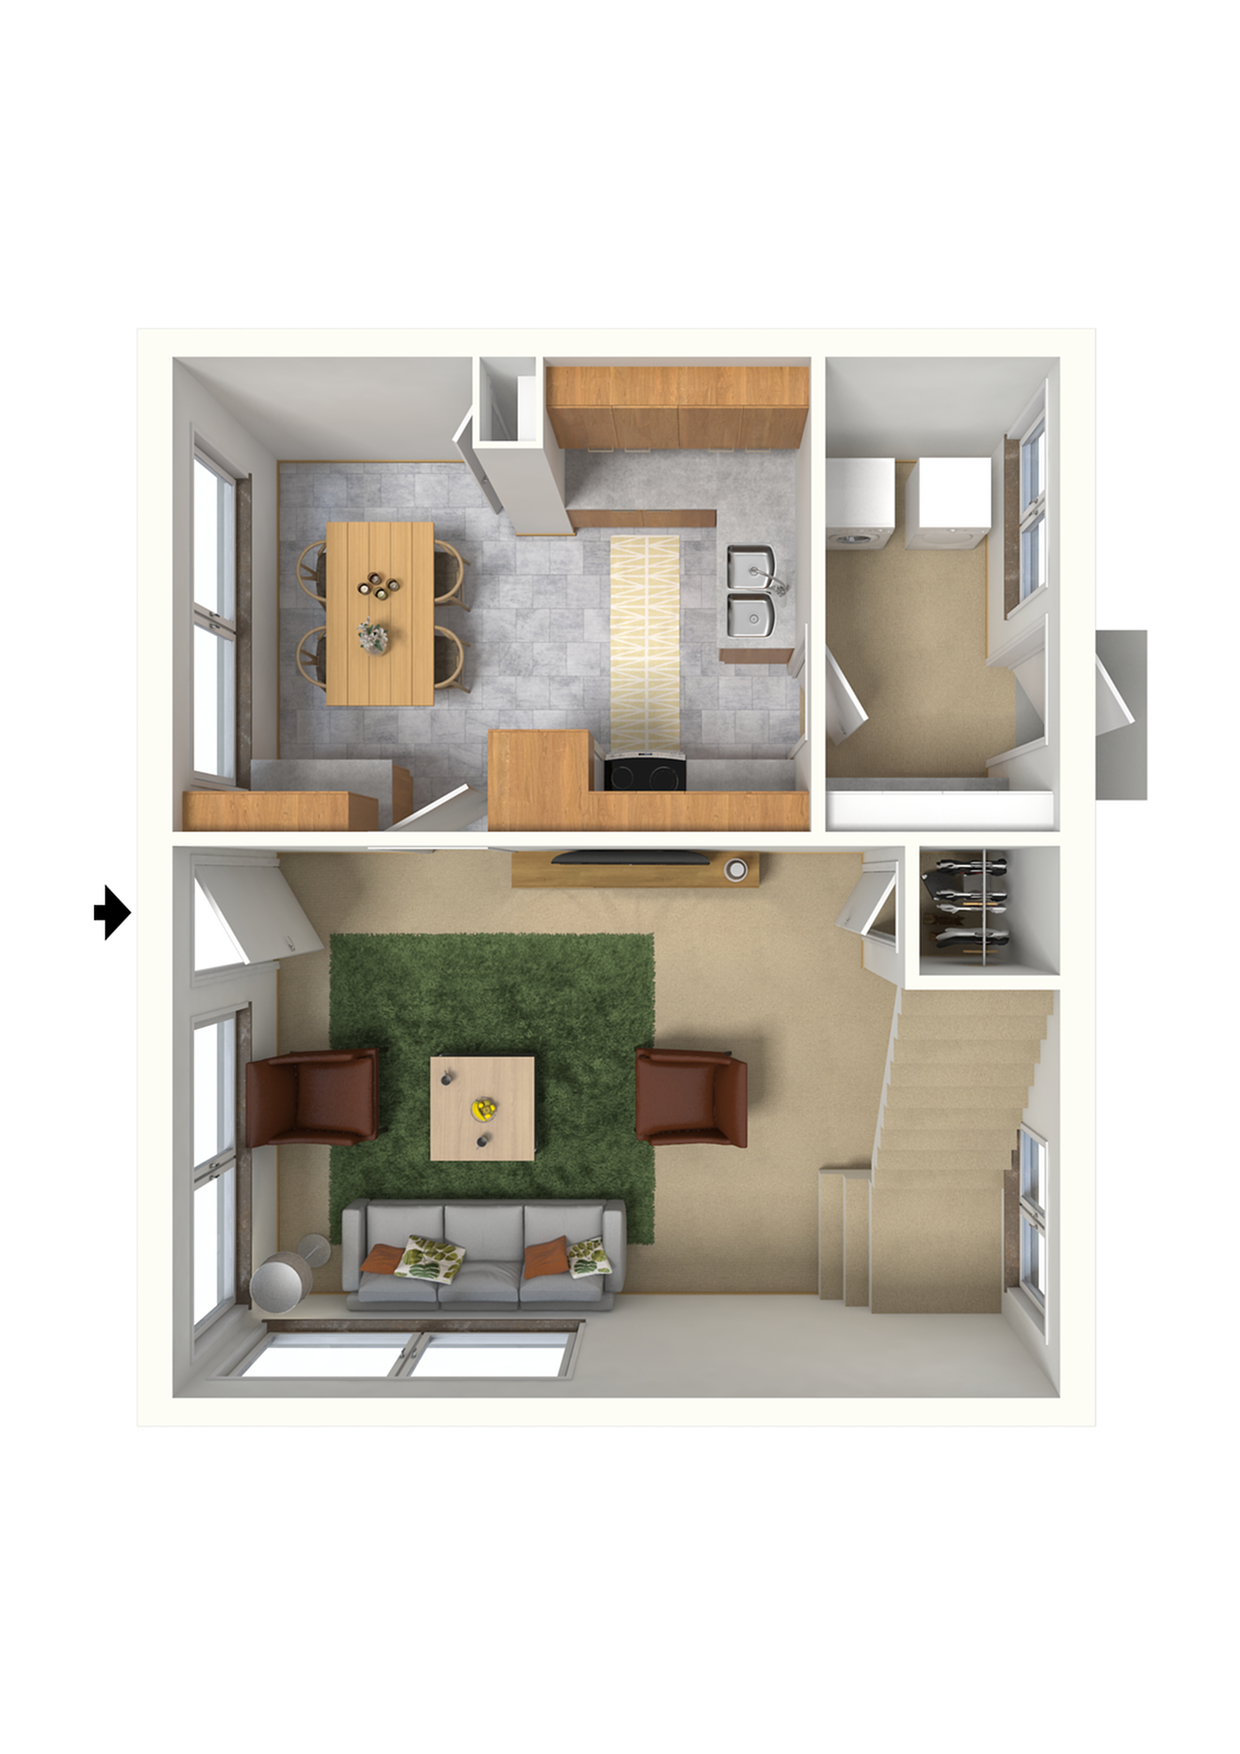 2 Bedroom Apartment Floor Plan | Hickam Air Force Base Housing | Hickam Communities